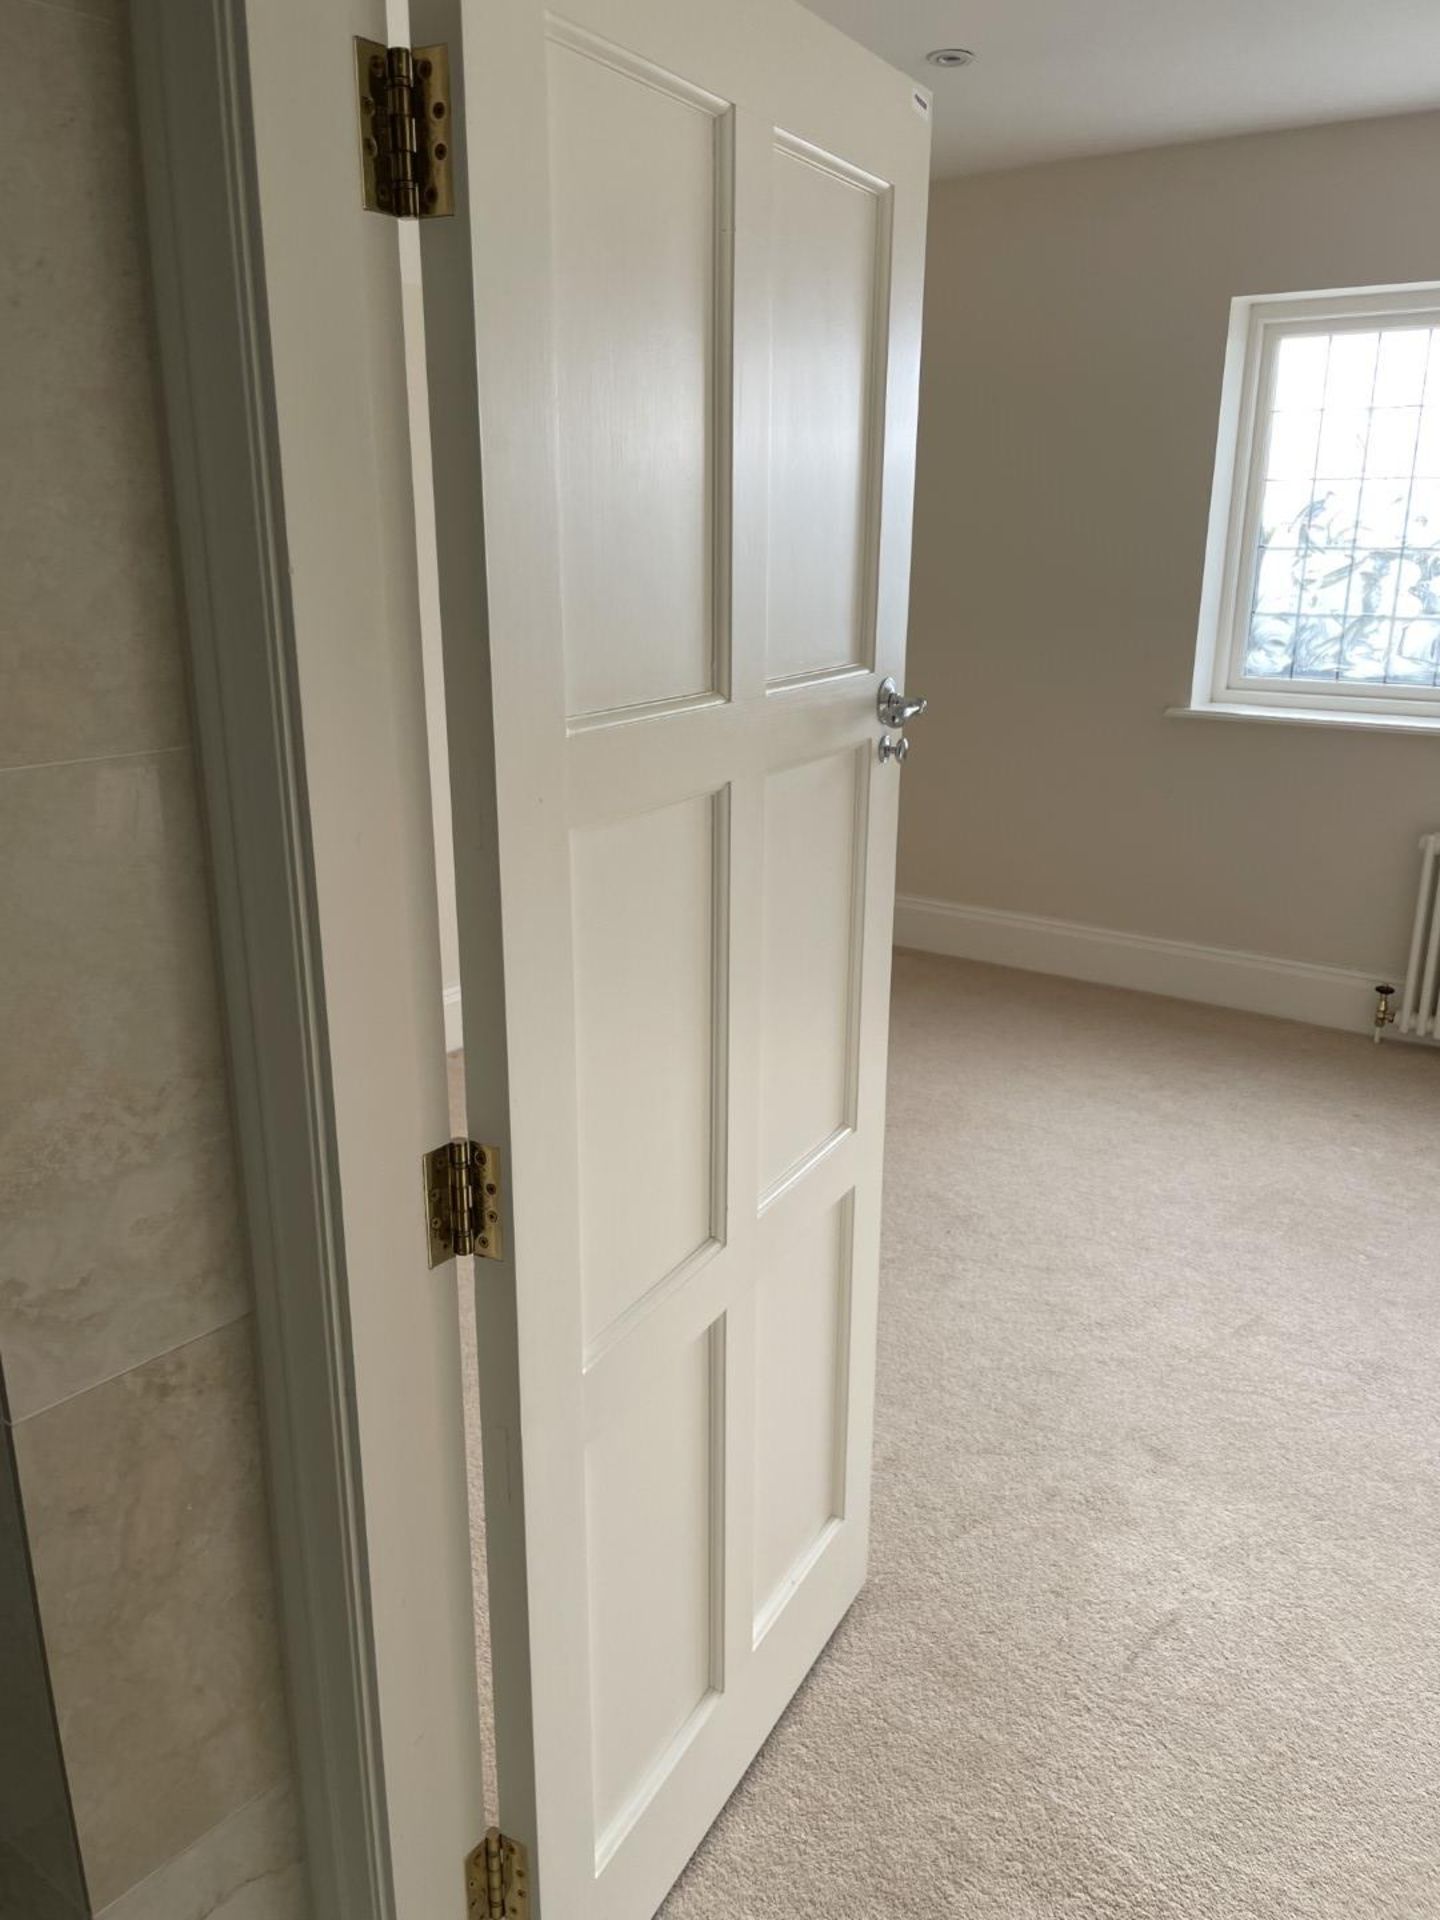 1 x Solid Wood Lockable Painted Internal Door in White - Image 2 of 11